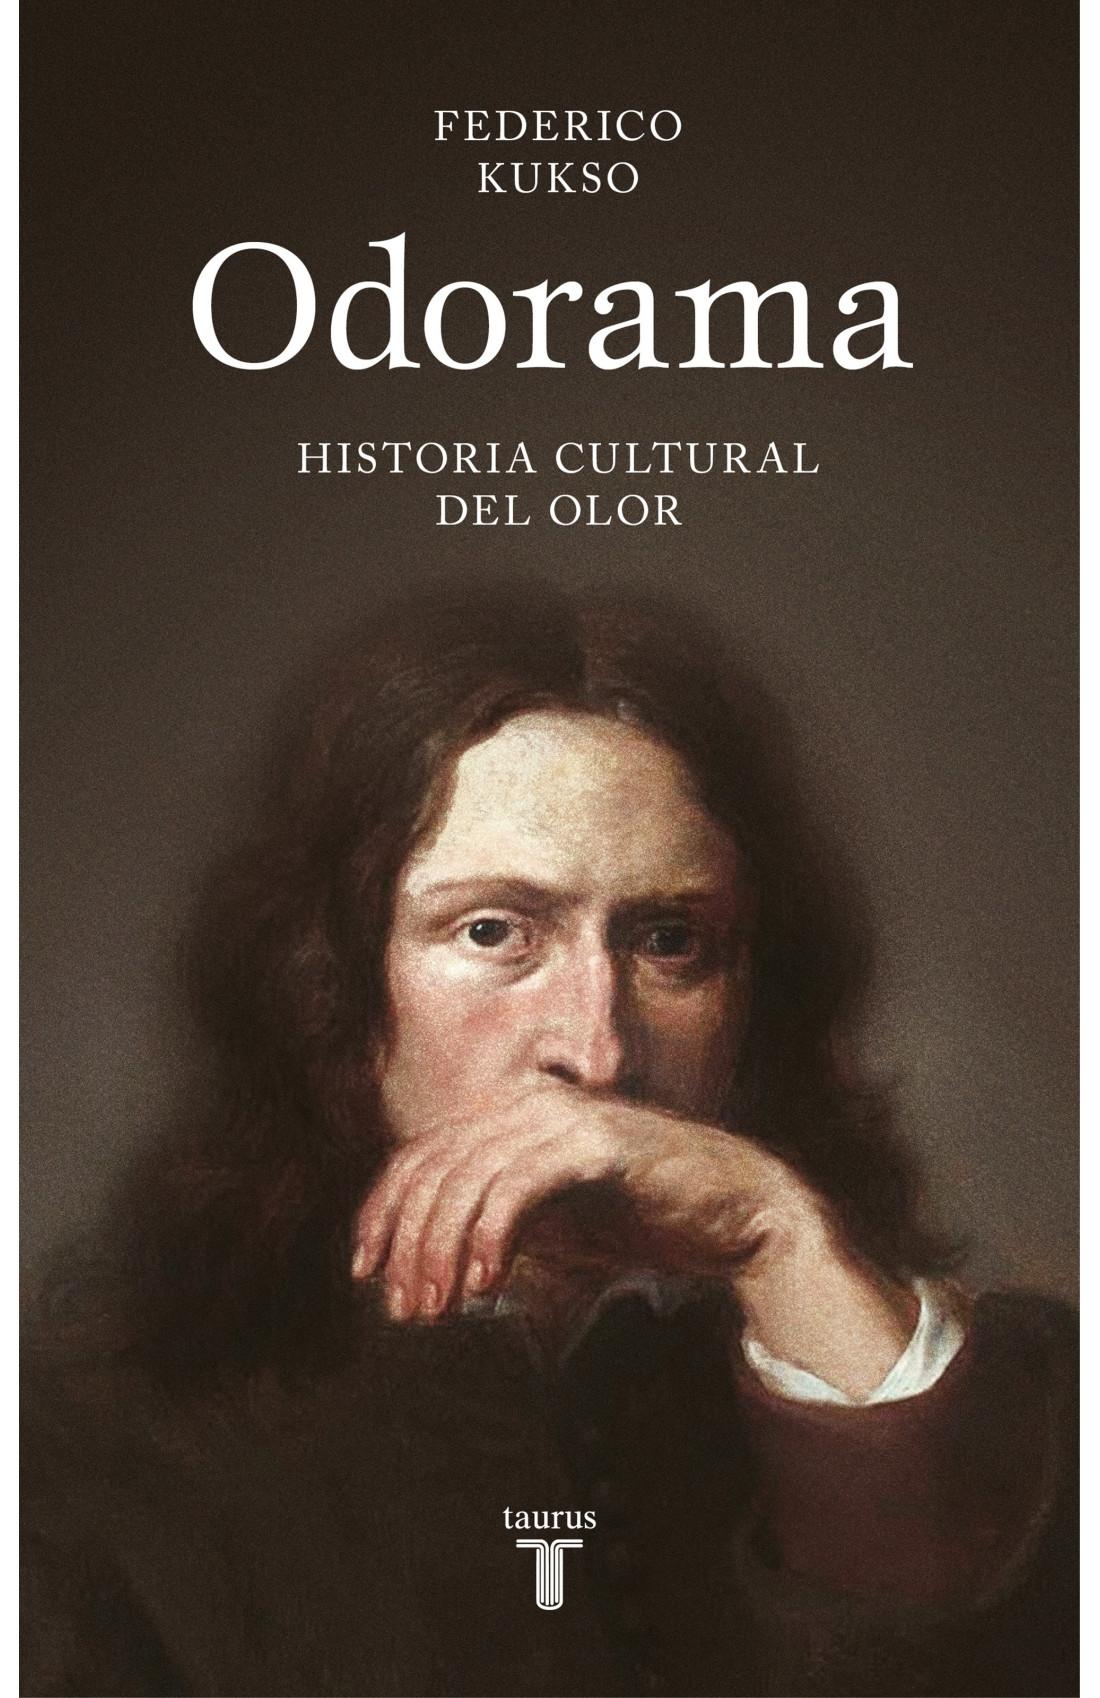 Odorama "Historia Cultural del Olor". 